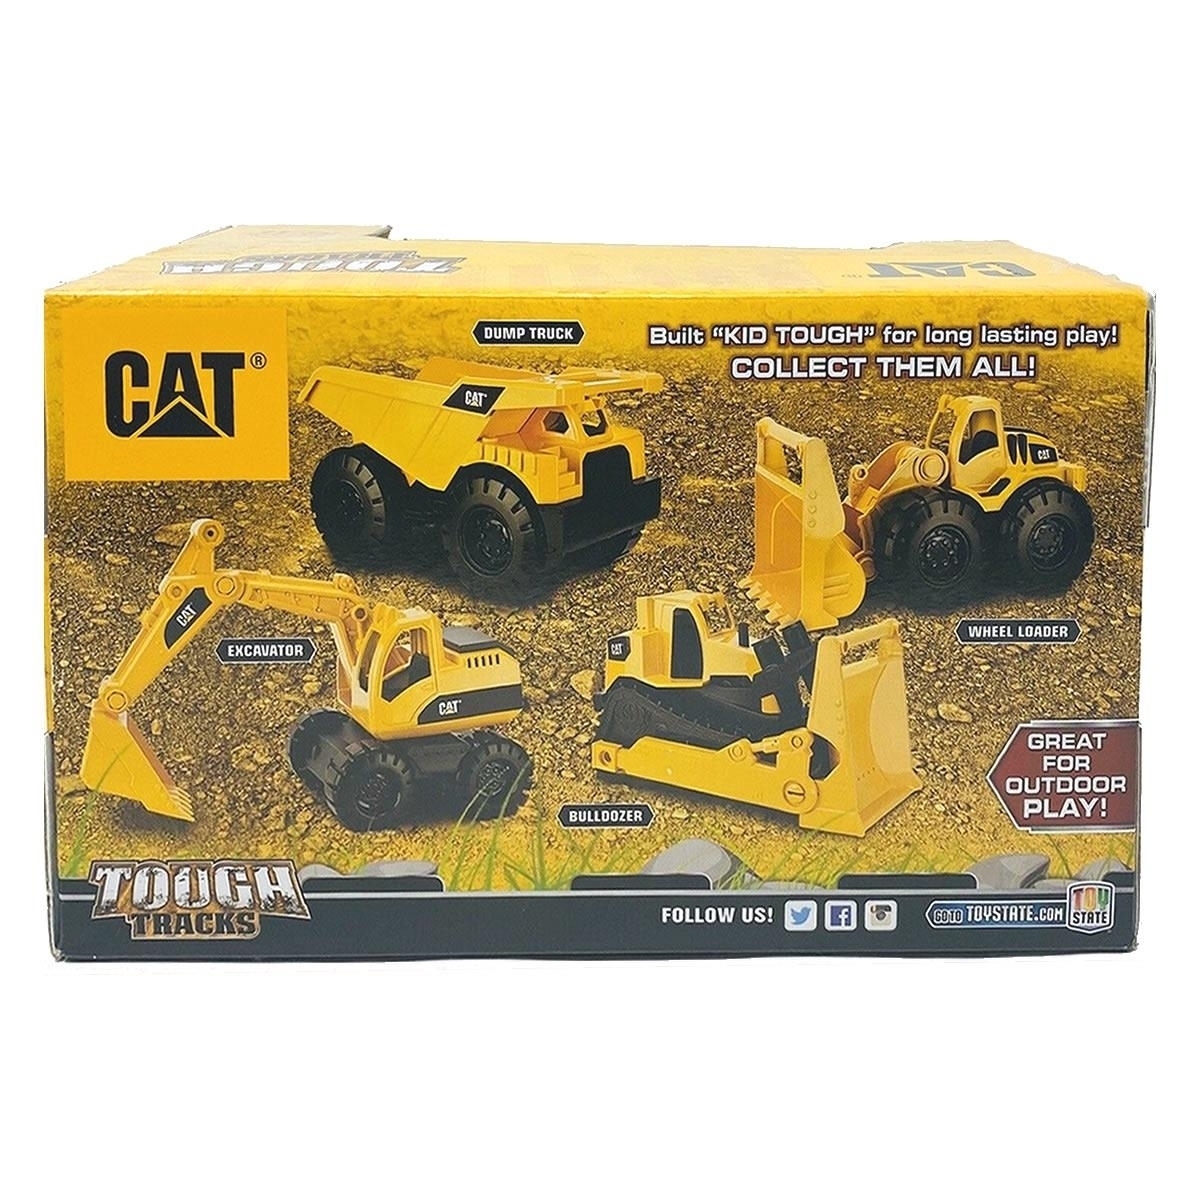 CAT Construction Crew Dump Truck Caterpillar Tough Tracks Indoor Outdoor Toy Play State